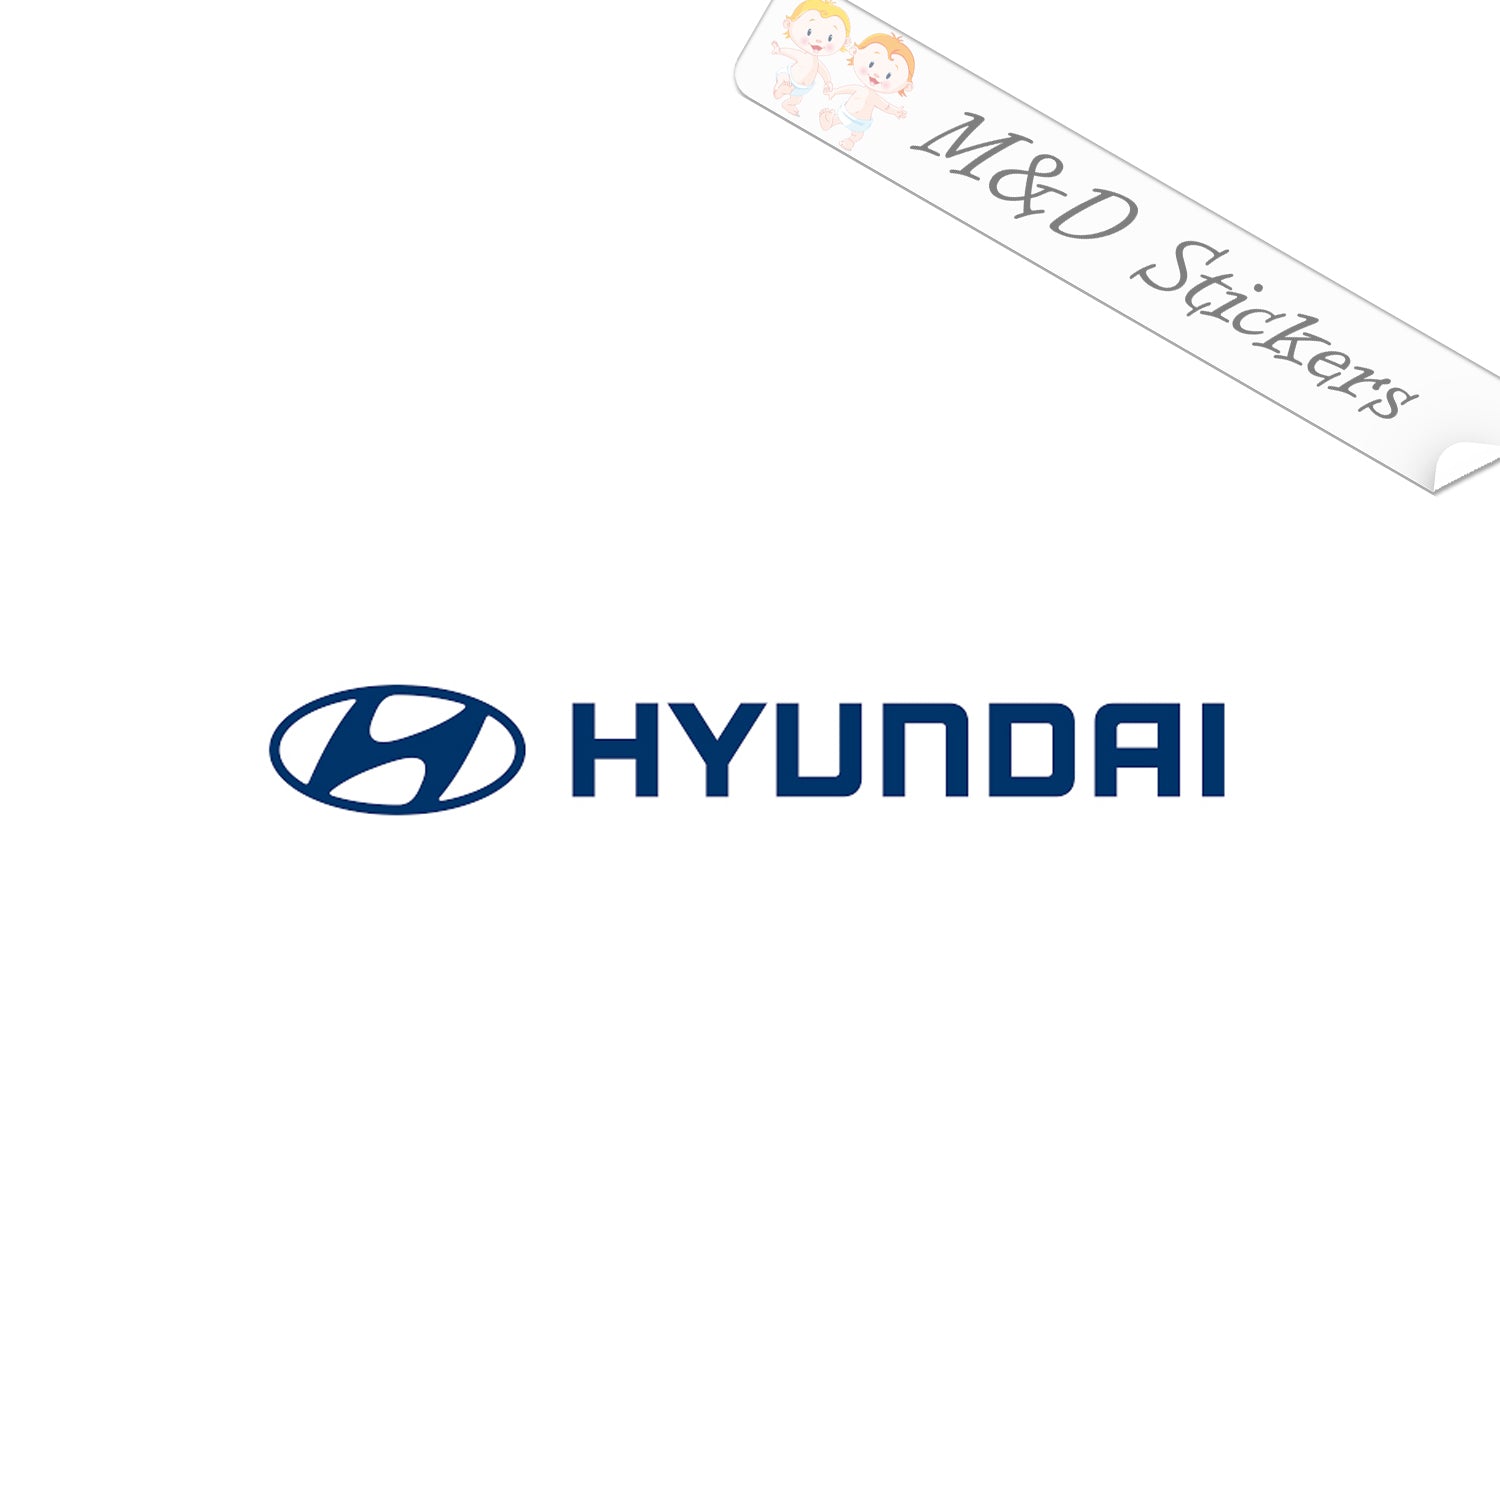 Hyundai Decal Sticker - HYUNDAI-LOGO-DECAL